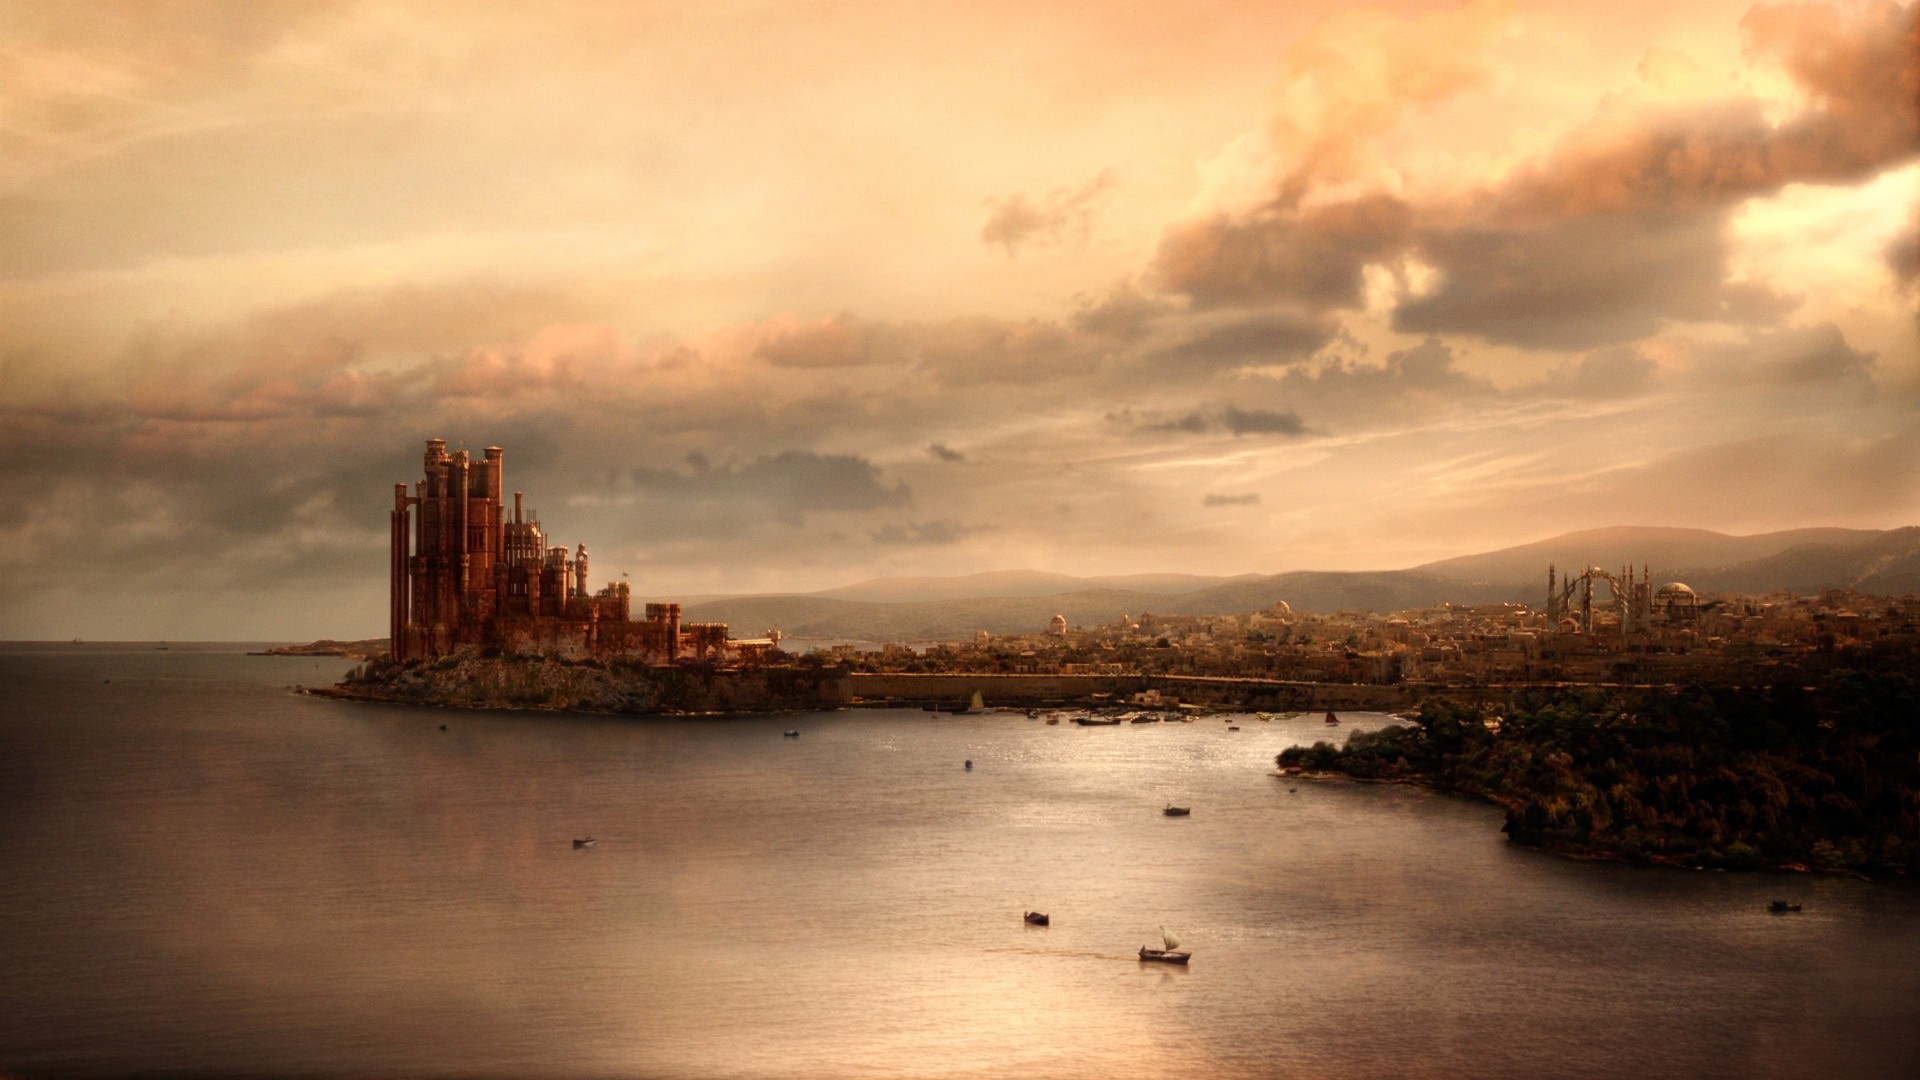 General 1920x1080 Game of Thrones TV series fantasy art sky sunlight castle